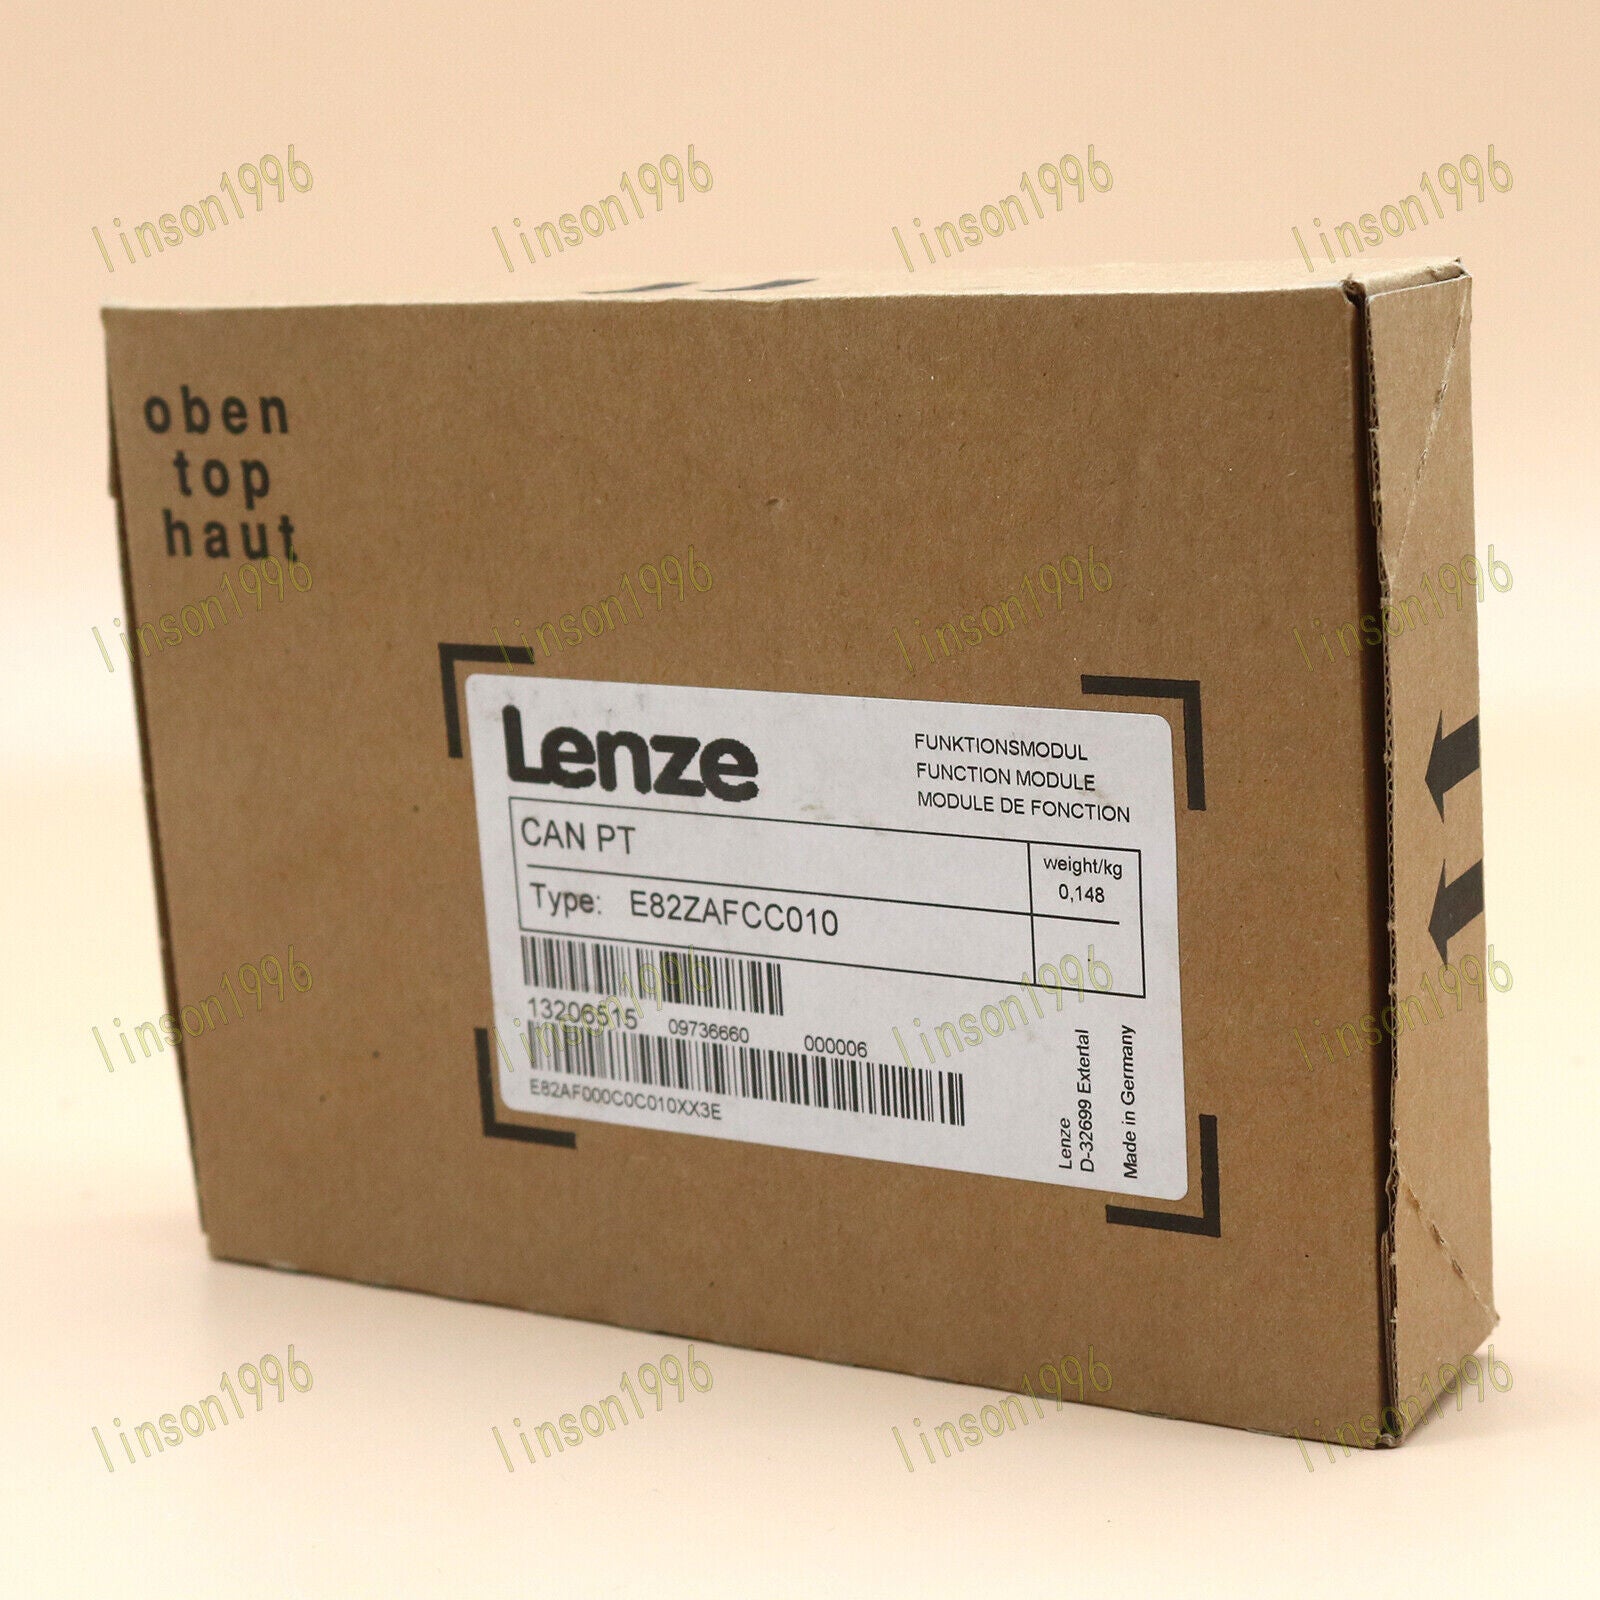 new One  LENZE board communication module E82ZAFCC010 in box ship